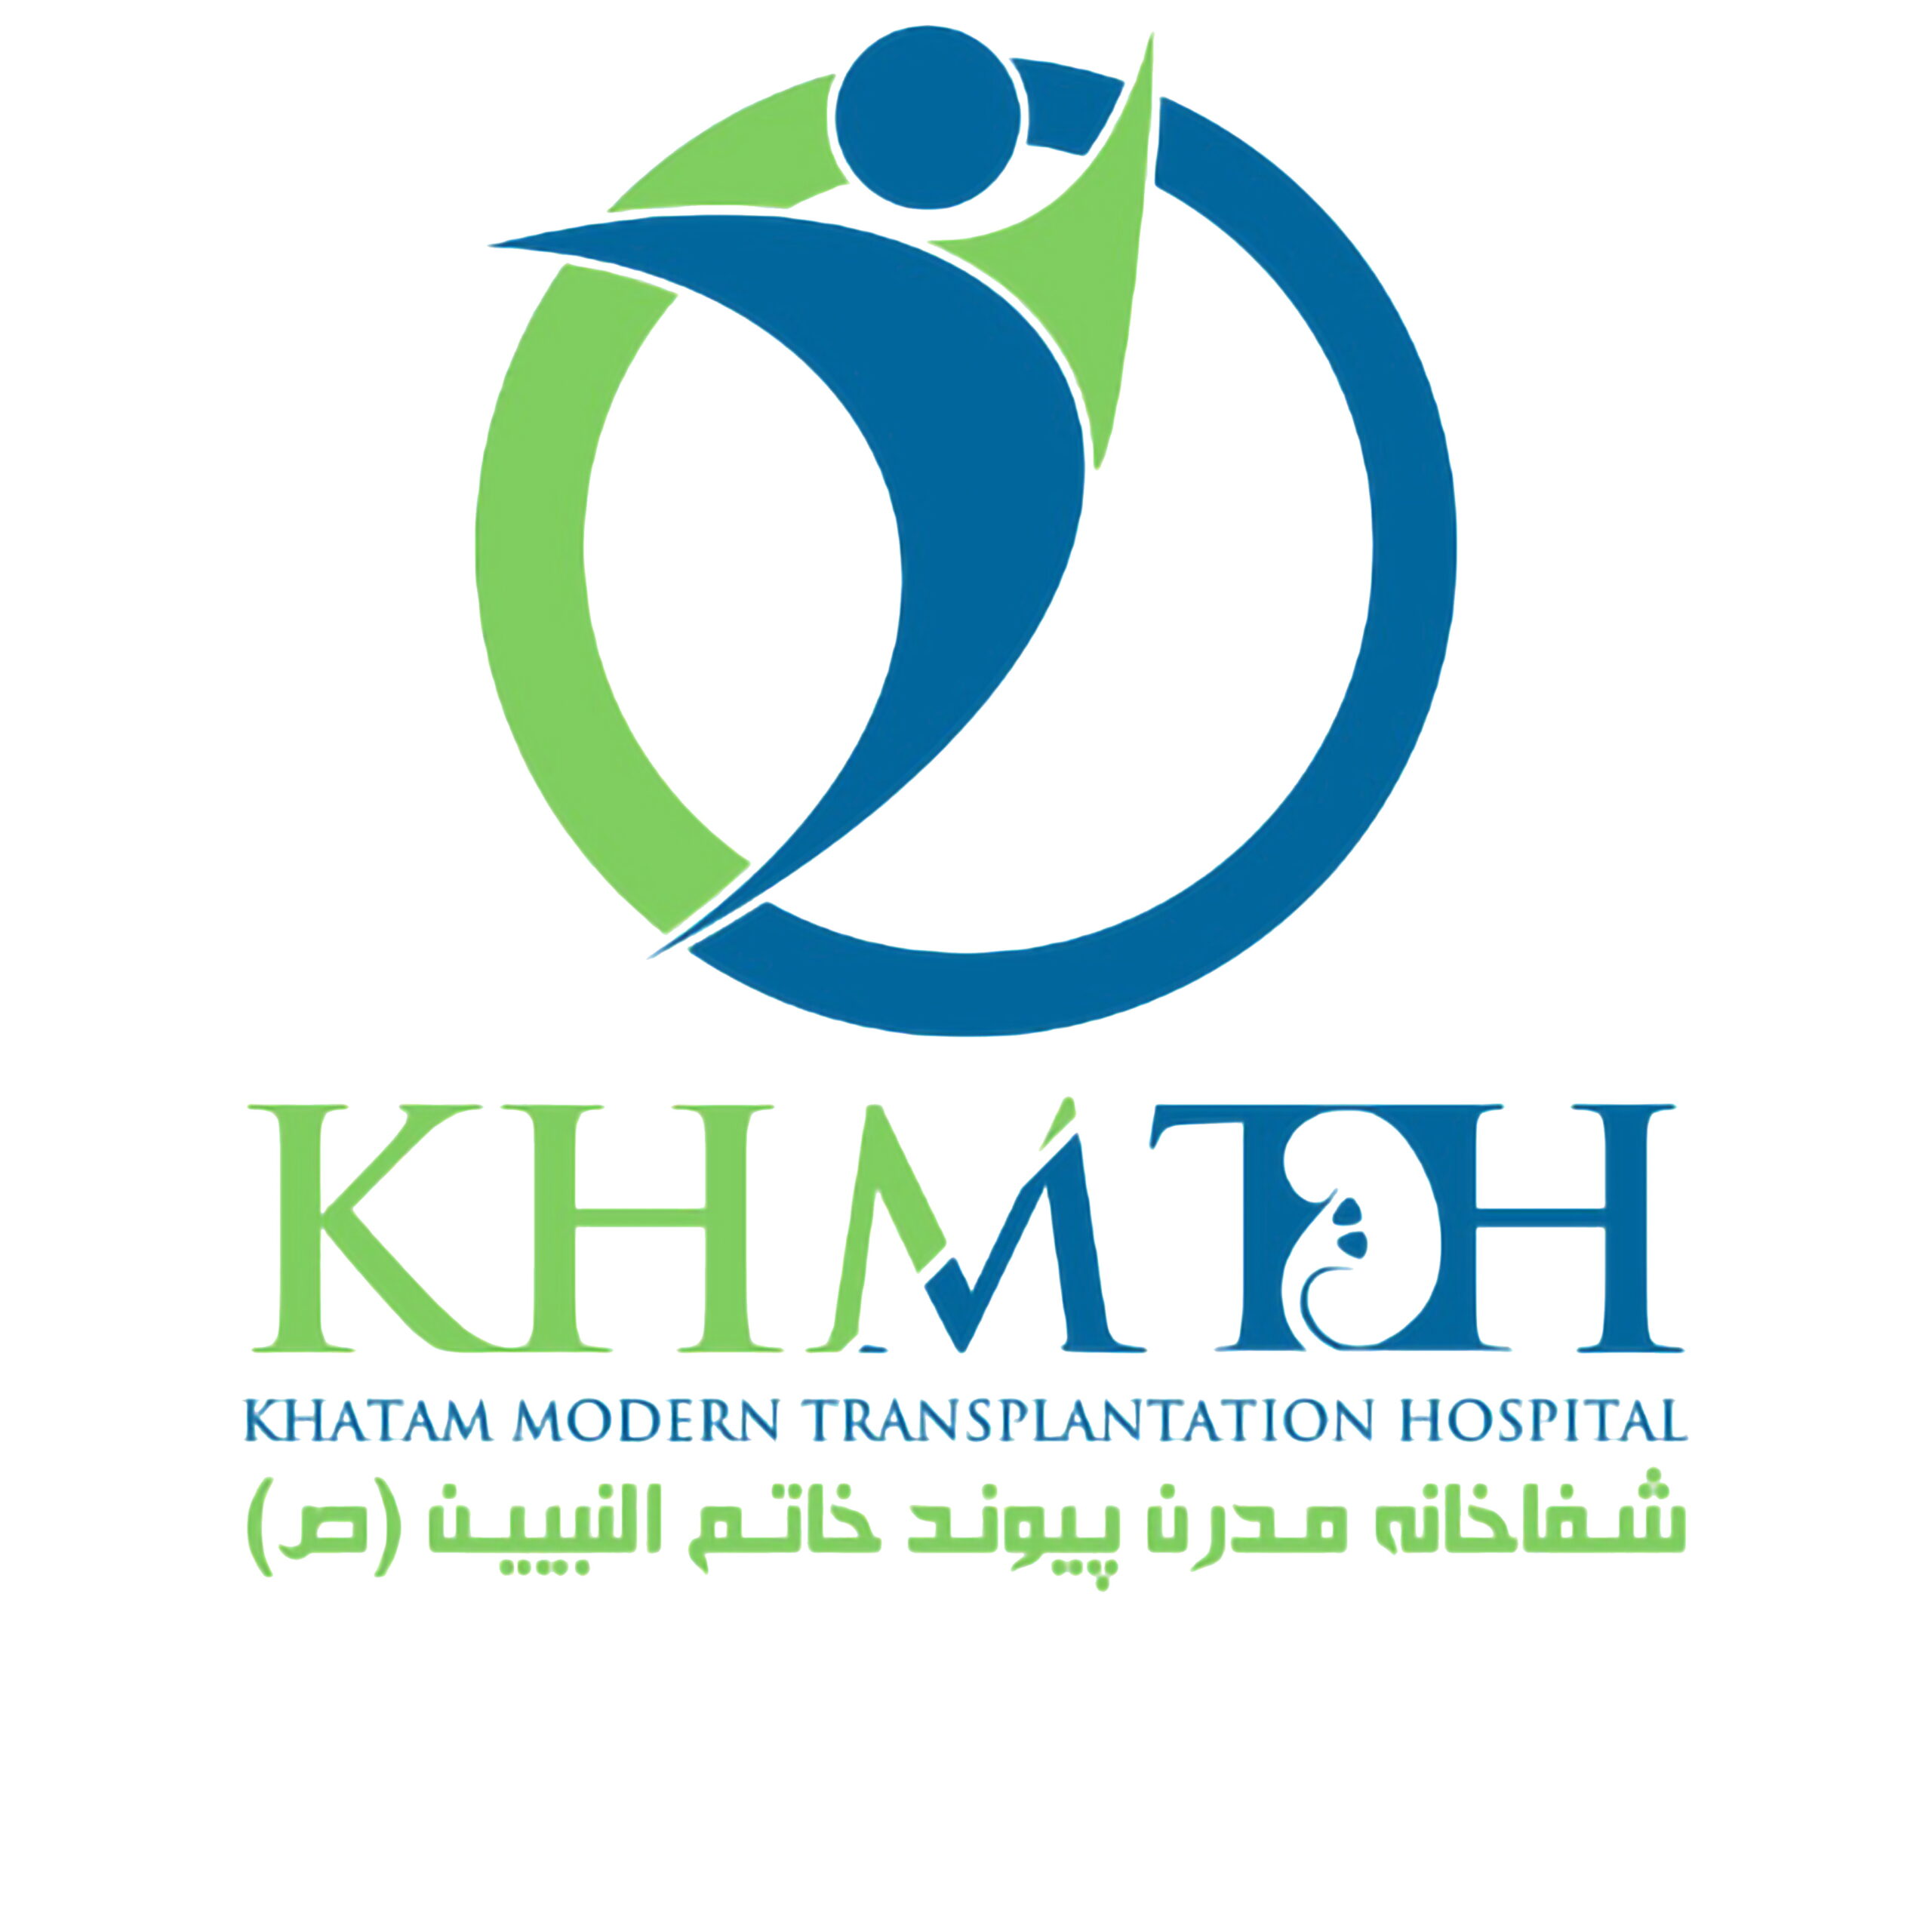 Khatam Modern Transplantation Hospital